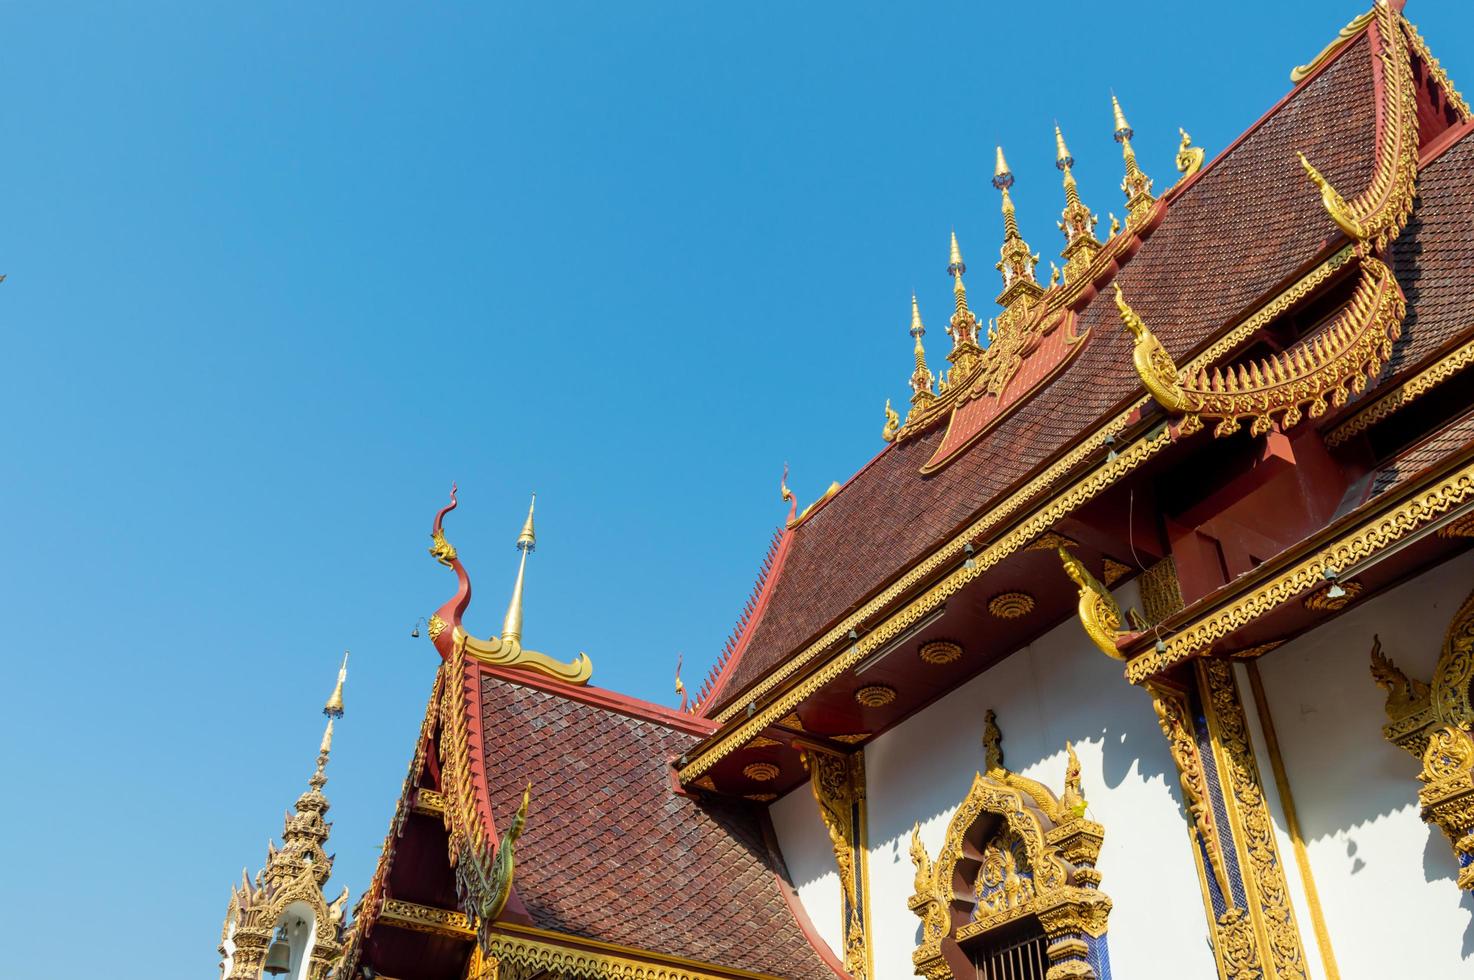 chiang mai thailand10 januari 2020wat saen mueang ma luang.wat saen mueang ma luang is een tempel in phaya mueang kaew de koning van mangrai nr. 11 werd opgericht als een koninklijke liefdadigheidsinstelling voor phaya saen muang. foto